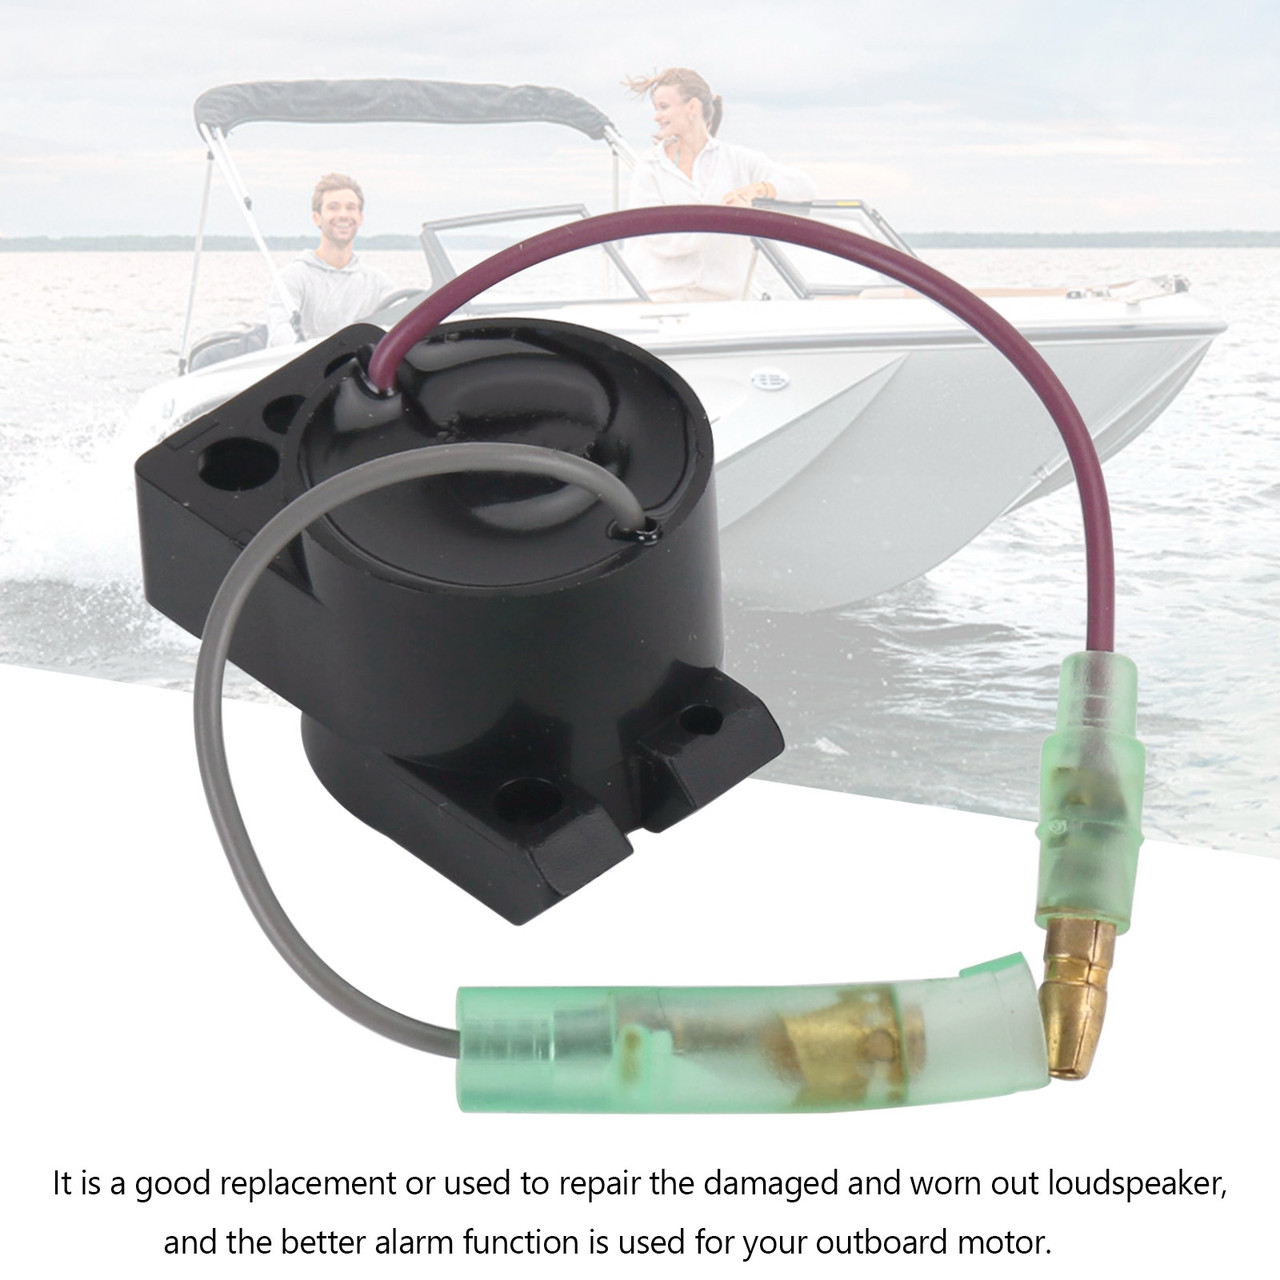 Outboard Buzzer Audio Warn Alarm Remote Control Box For Outboard Engine 816492A1